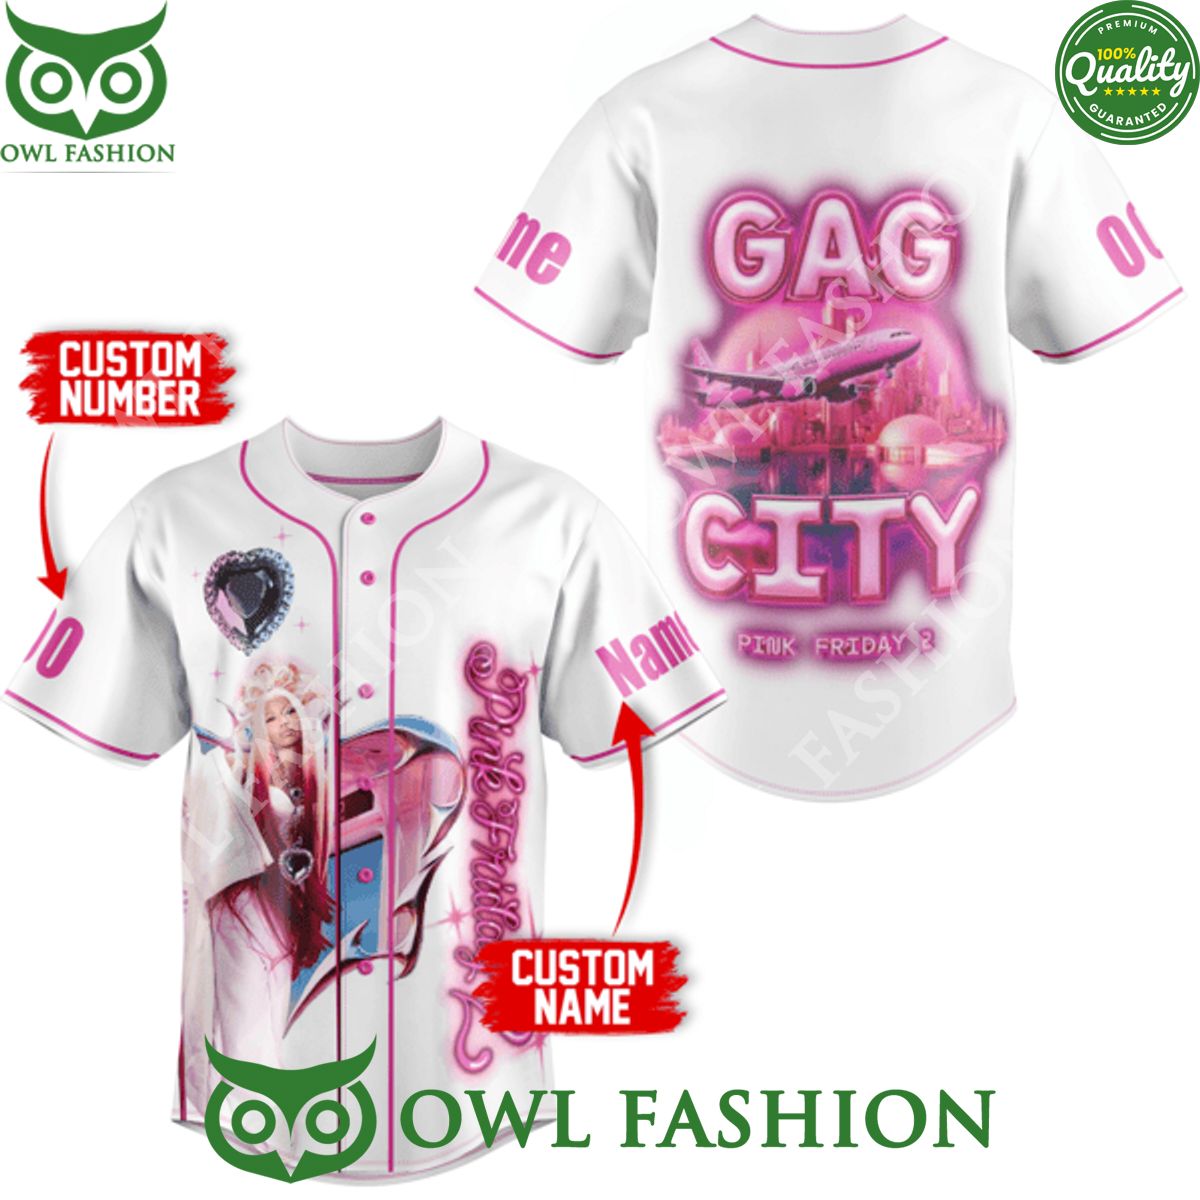 gag city pink friday 2 nicki minaj custom name and number baseball jersey shirt 1 TP8LW.jpg